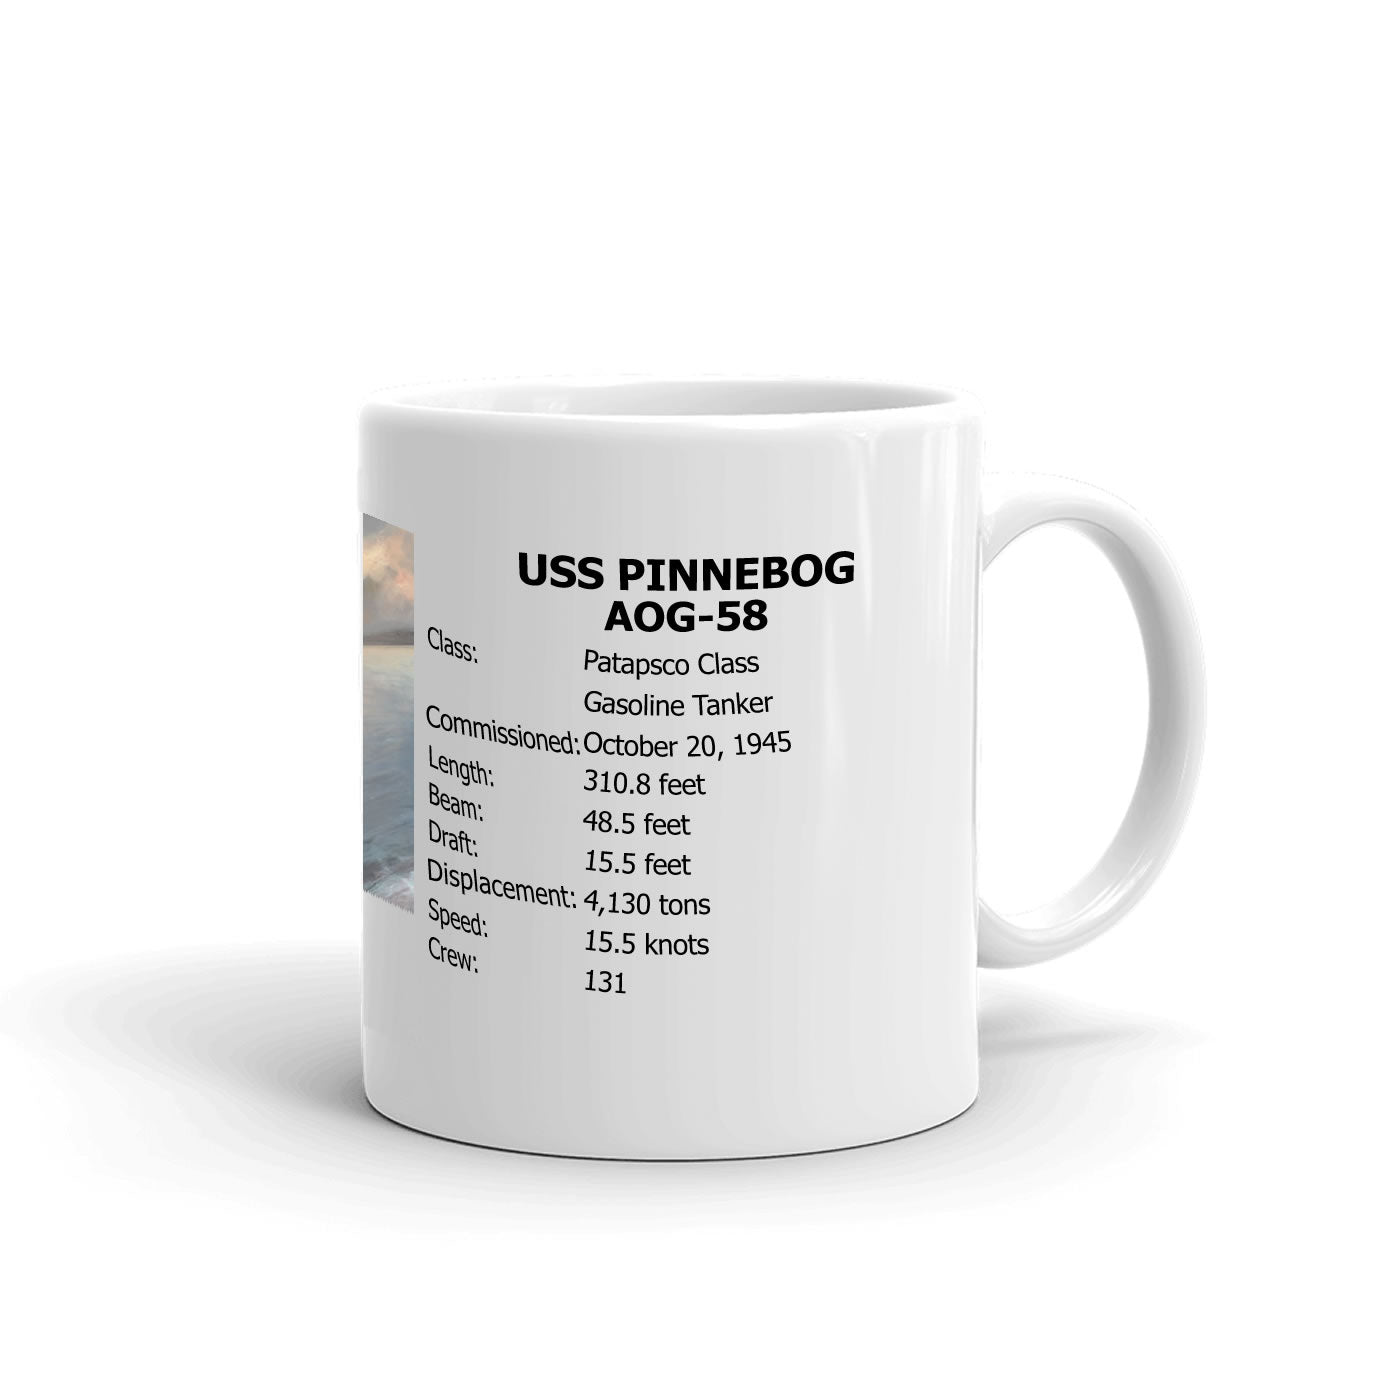 USS Pinnebog AOG-58 Coffee Cup Mug Right Handle